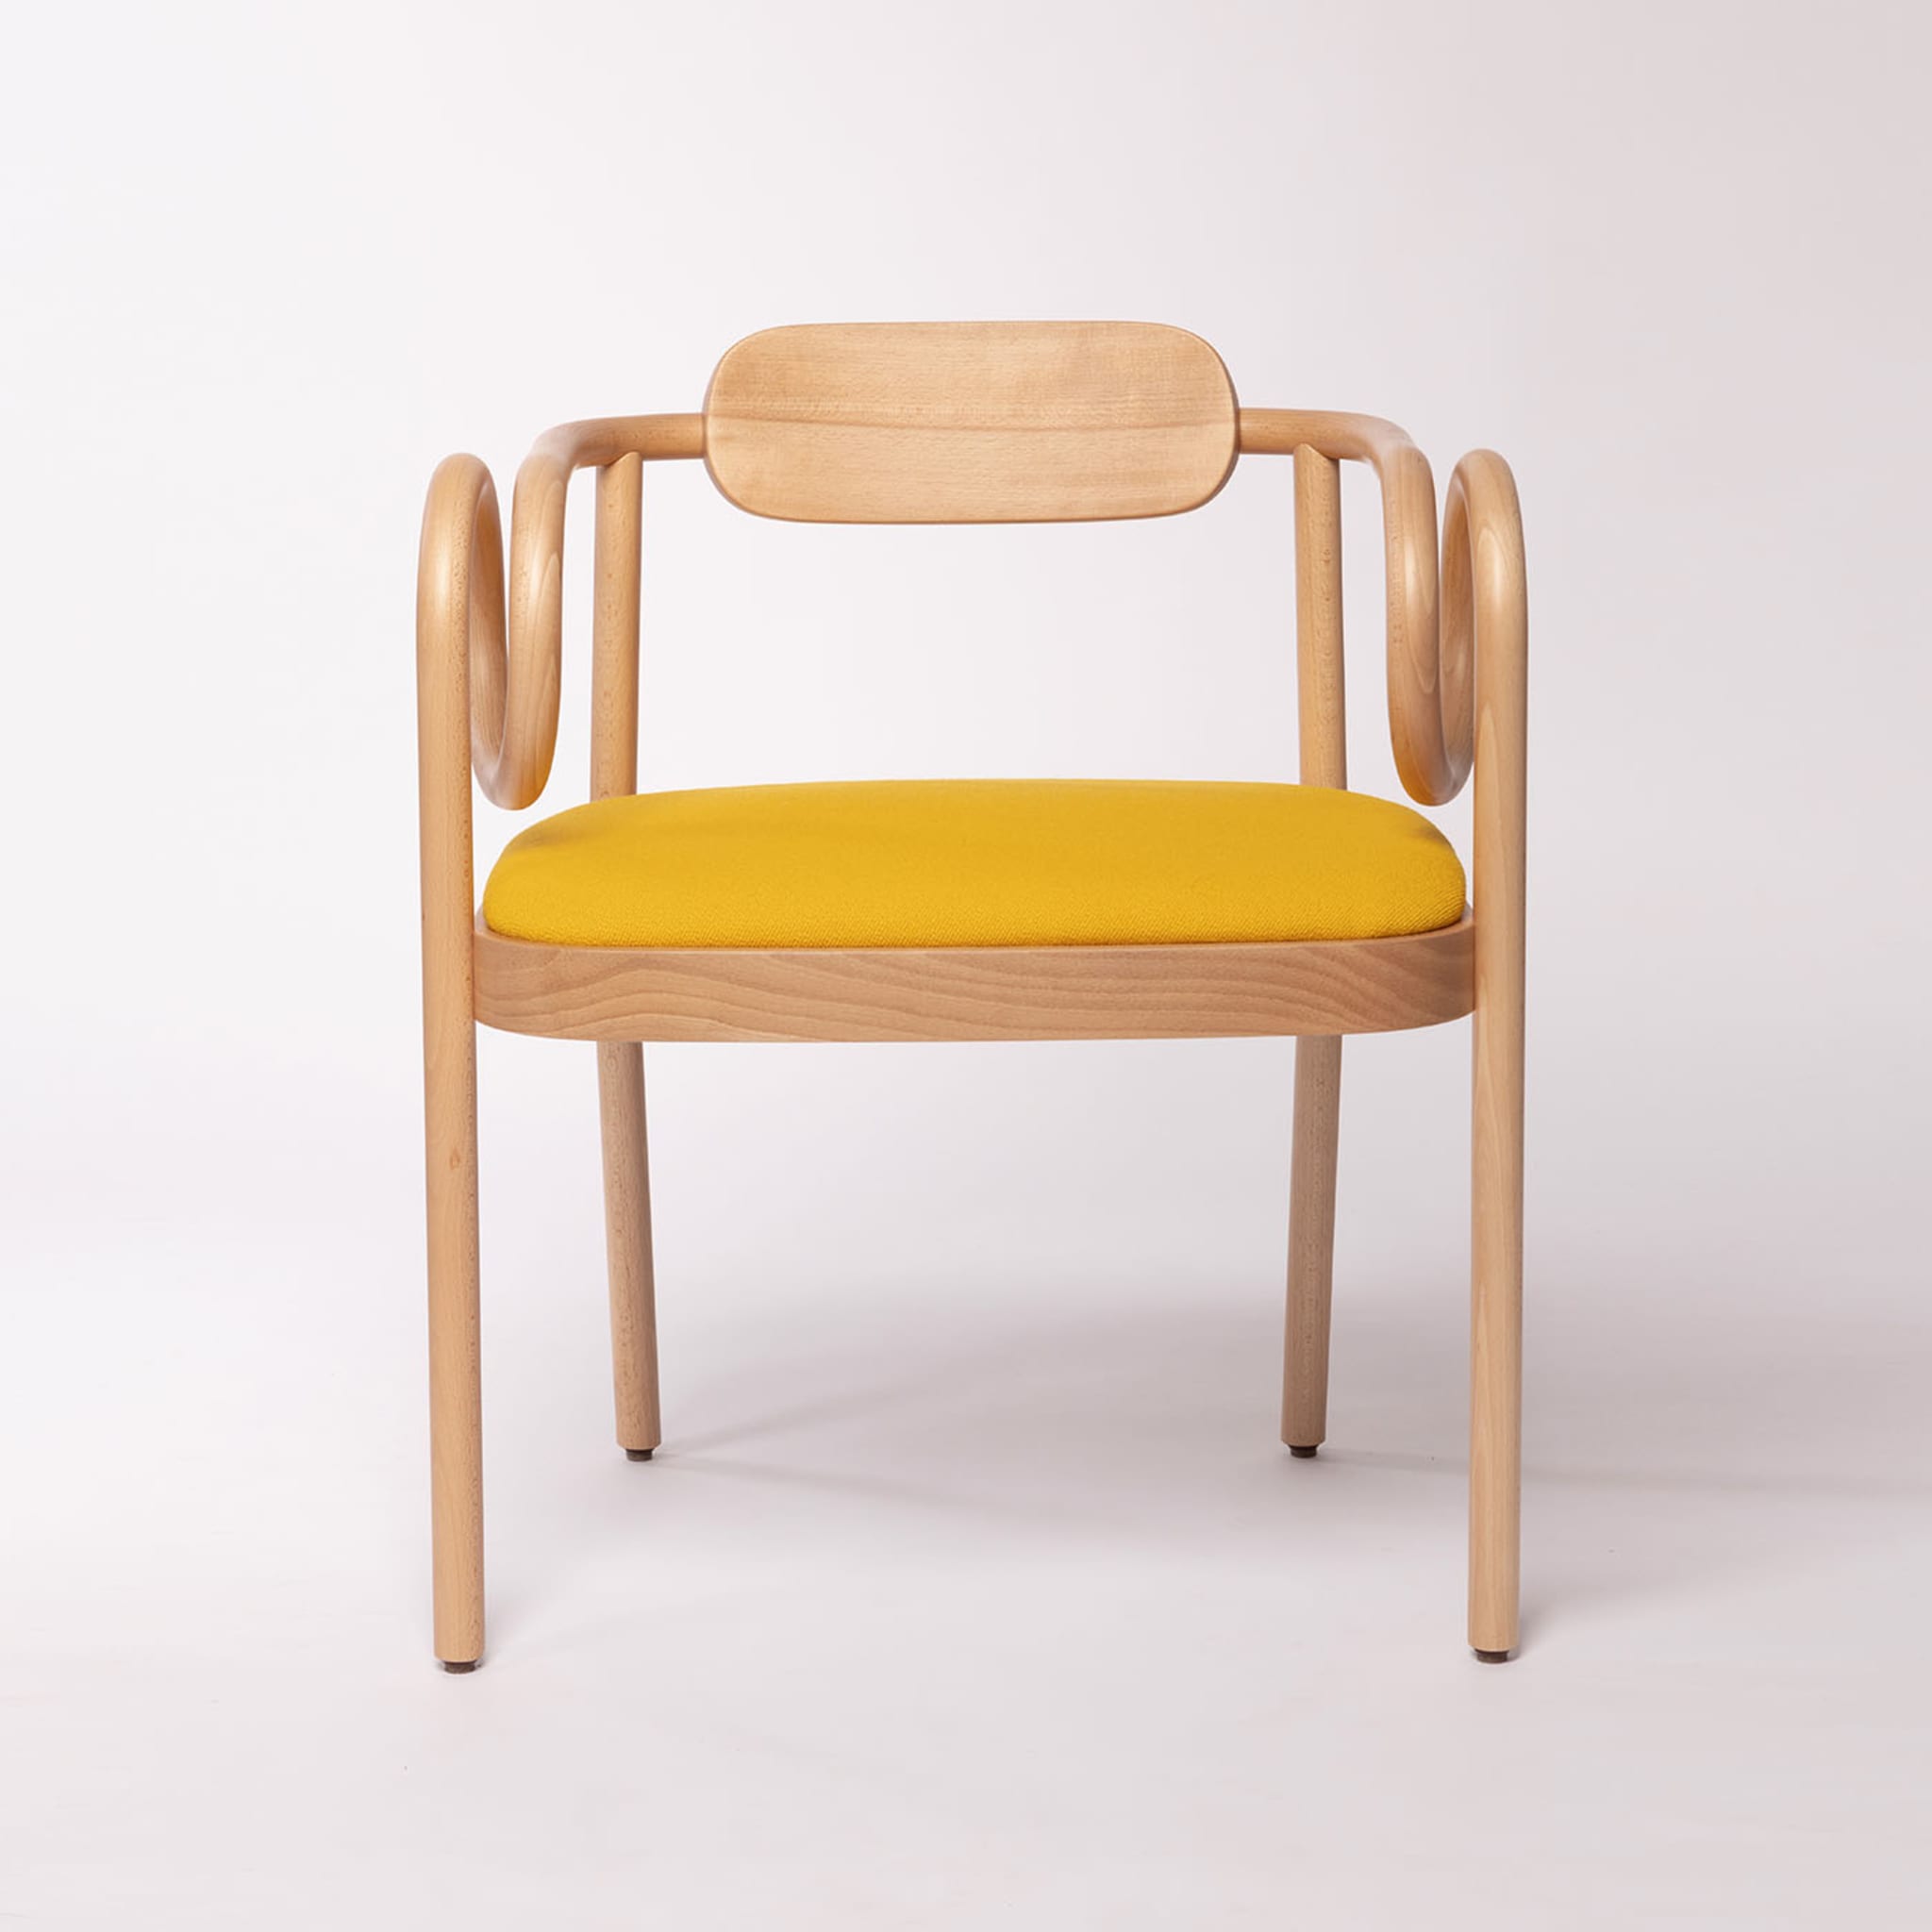 Loop Dining Chair by India Mahdavi - Alternative view 3